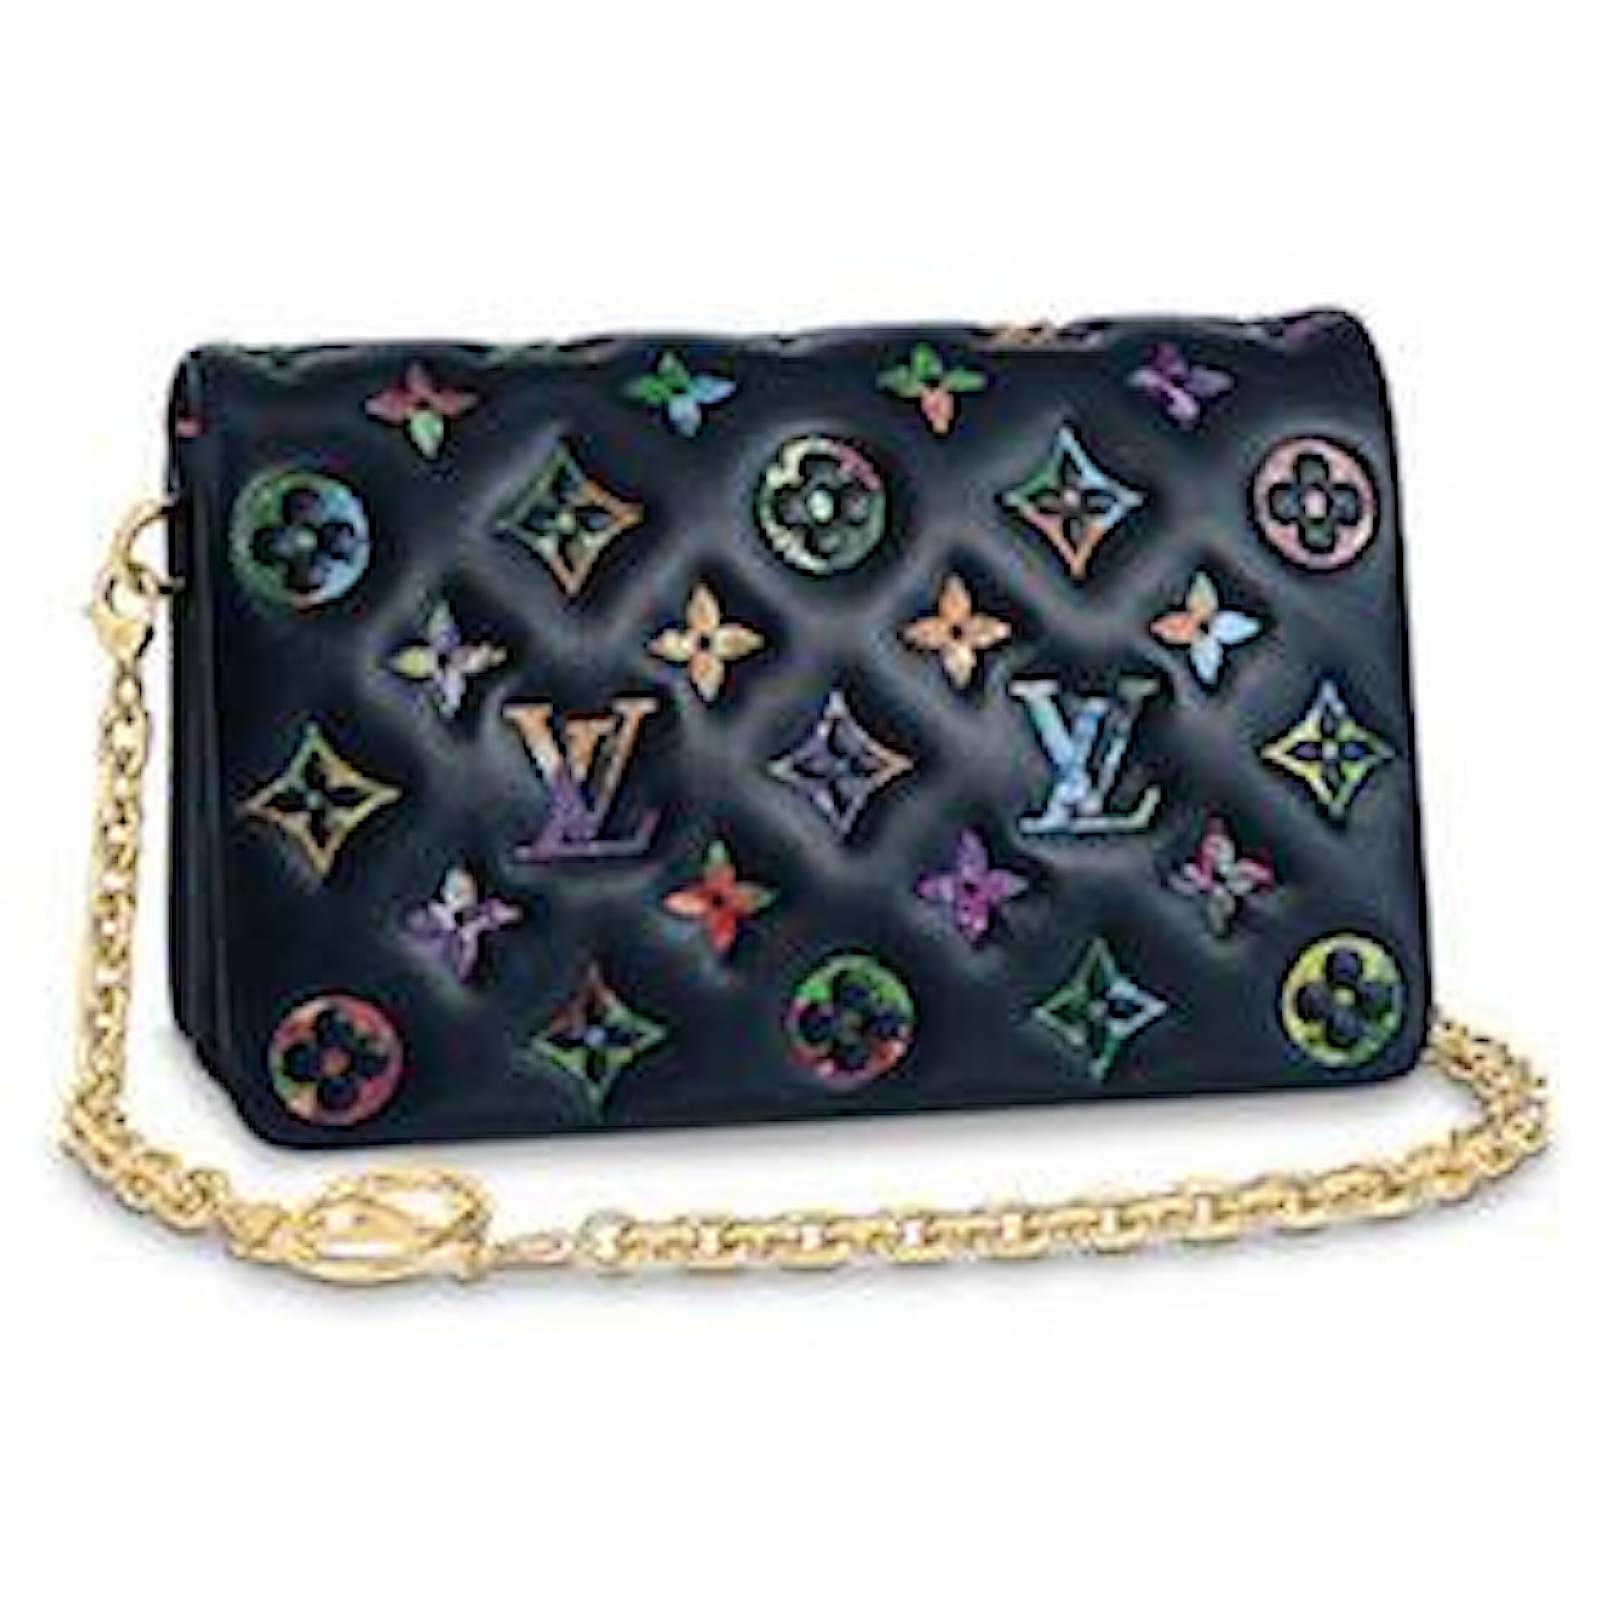 Brand New Louis Vuitton Coussin Pochette Black Monogram Embossed Leather Bag